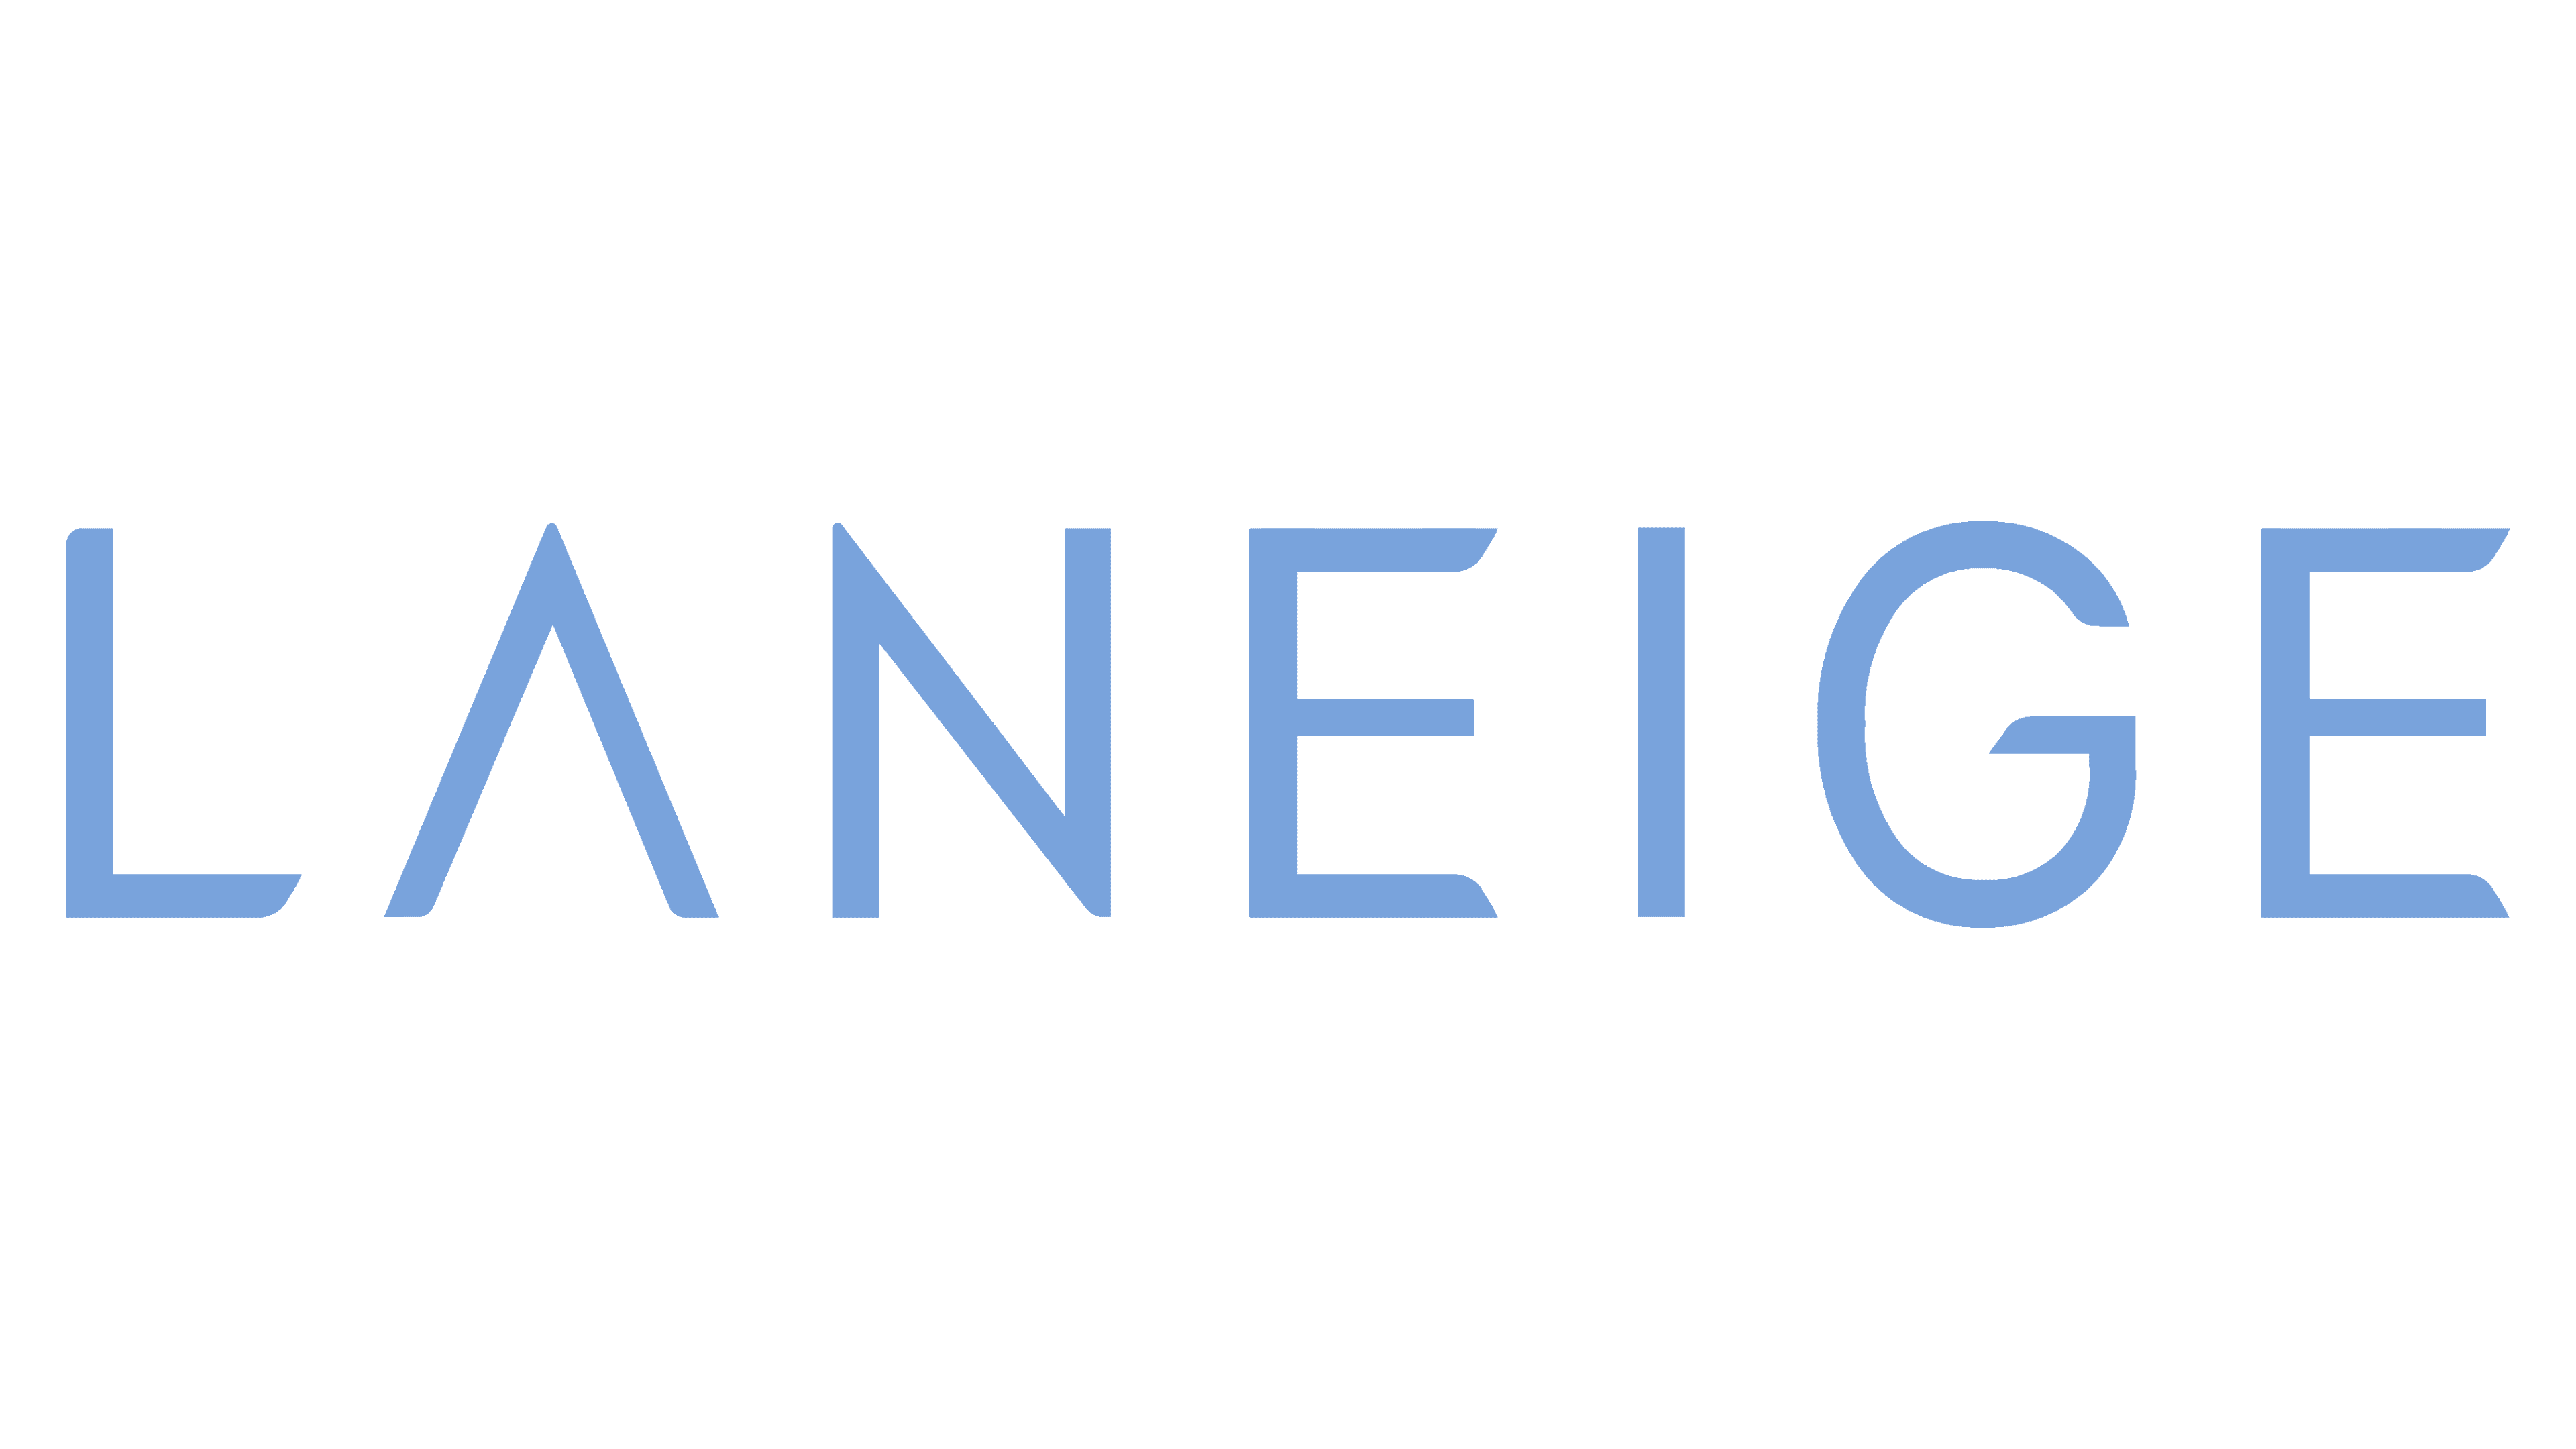 LANEIGE Logo